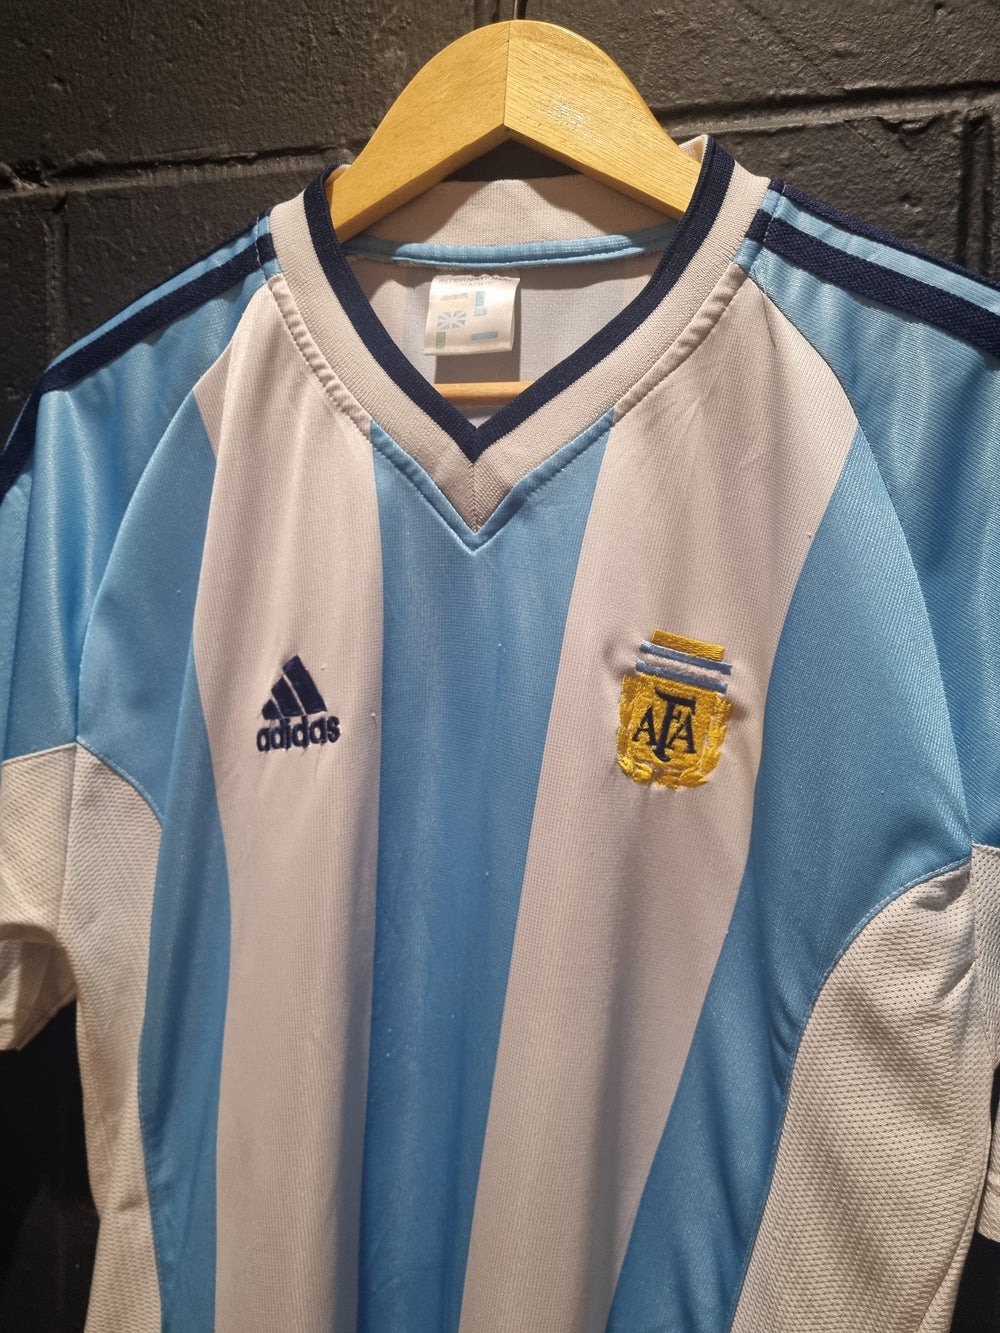 Argentina Retro International League Adidas Football Large